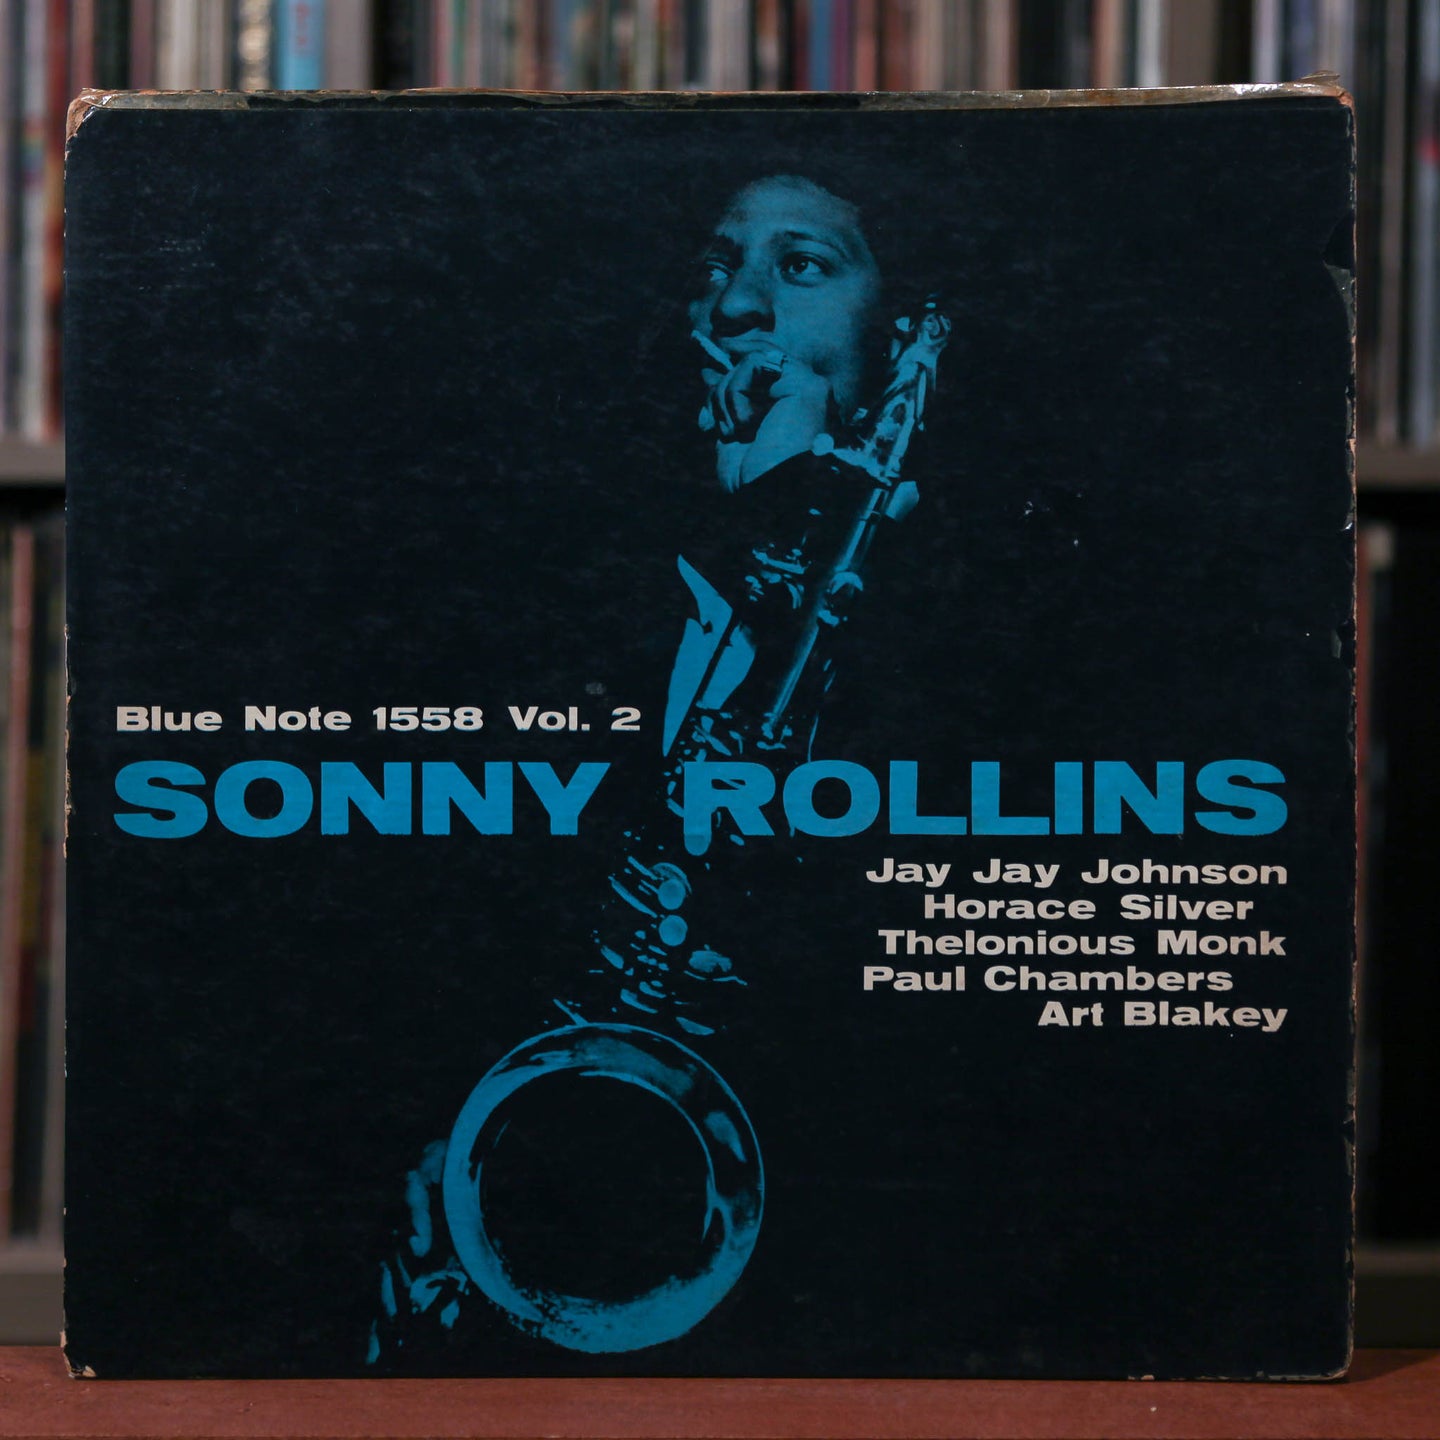 Sonny Rollins - Vol 2 - 1959 Blue Note